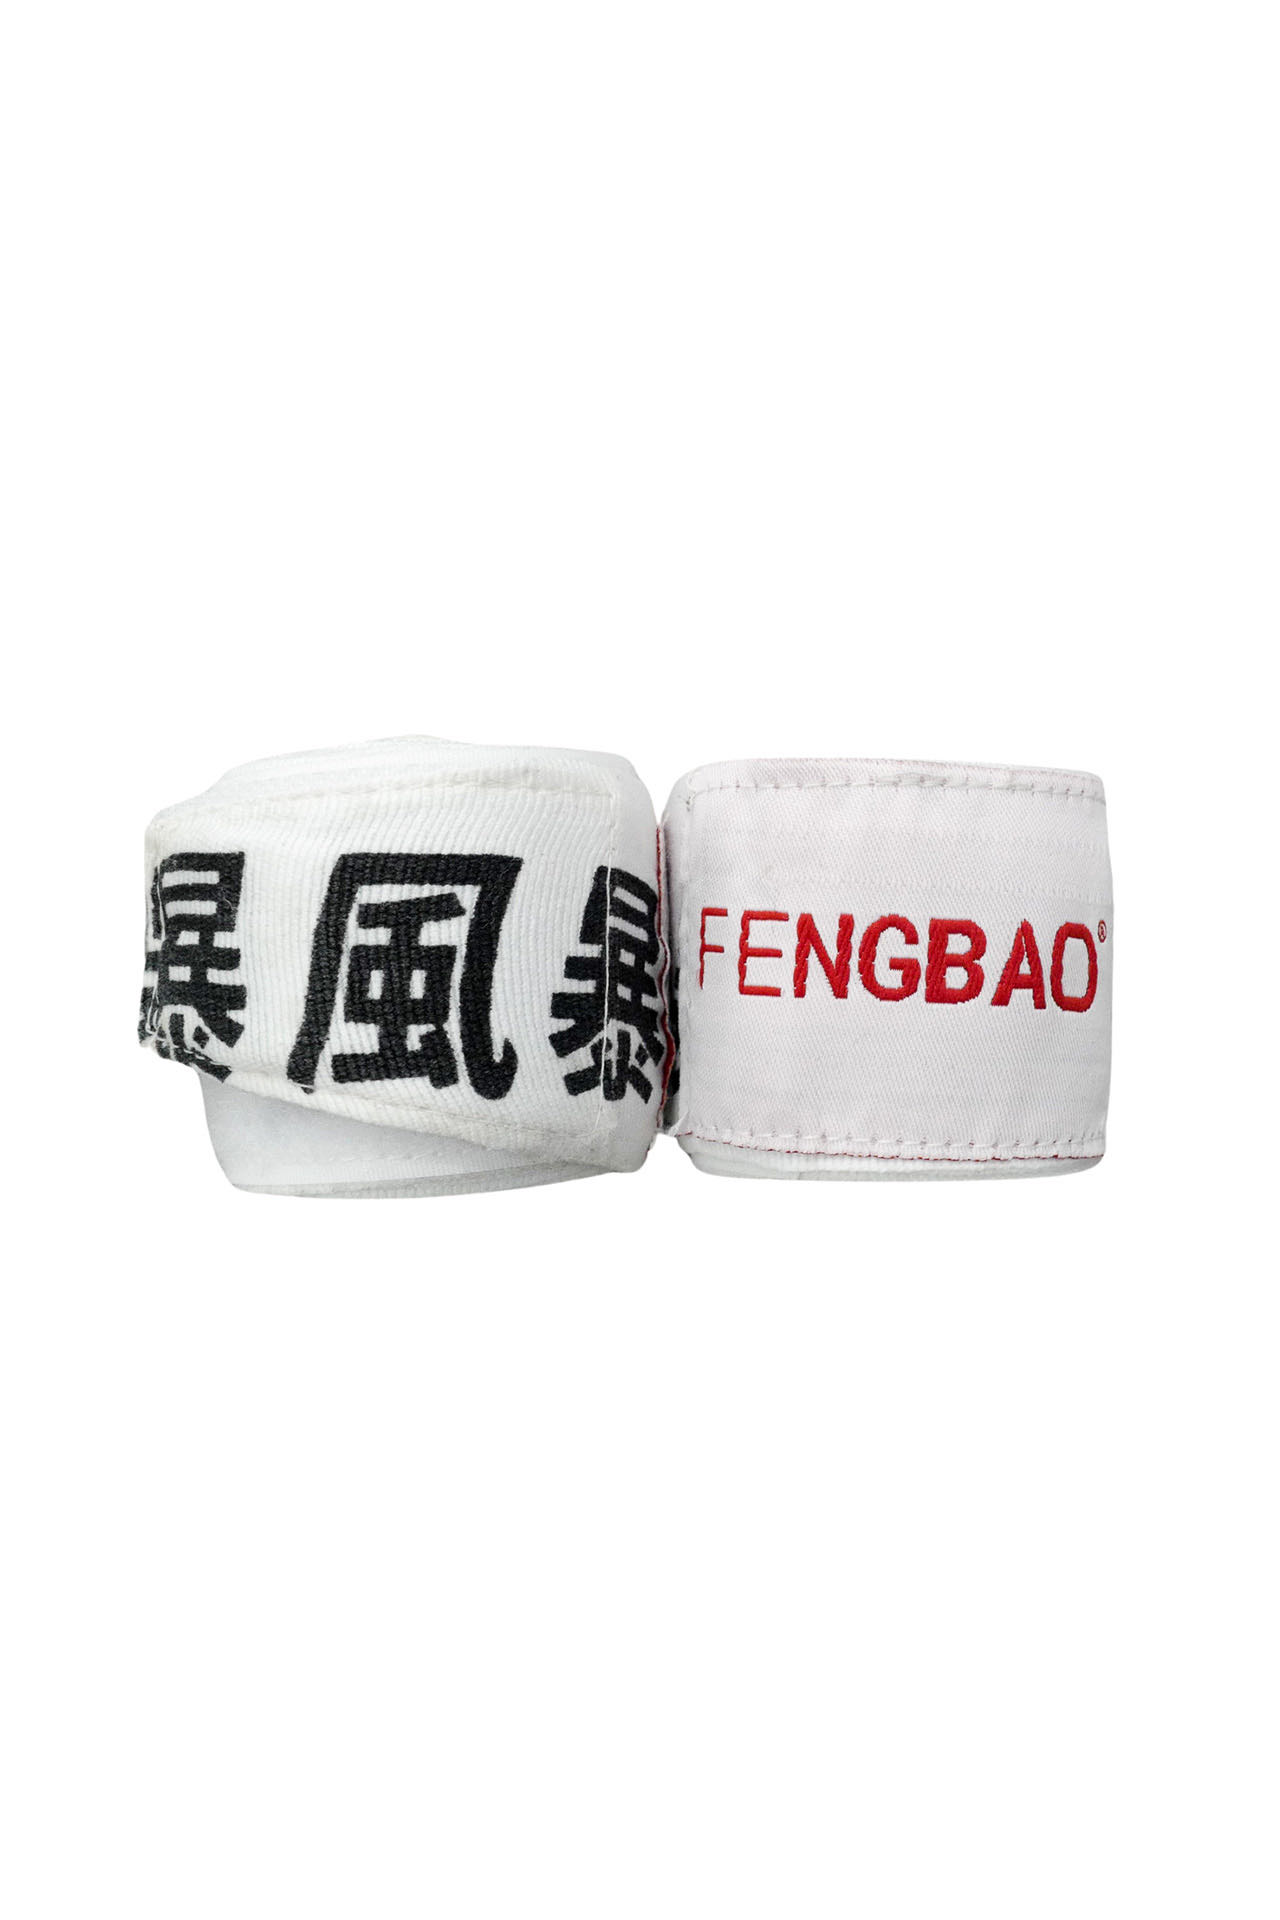 fengbao kung fu box bandagen wien 1080